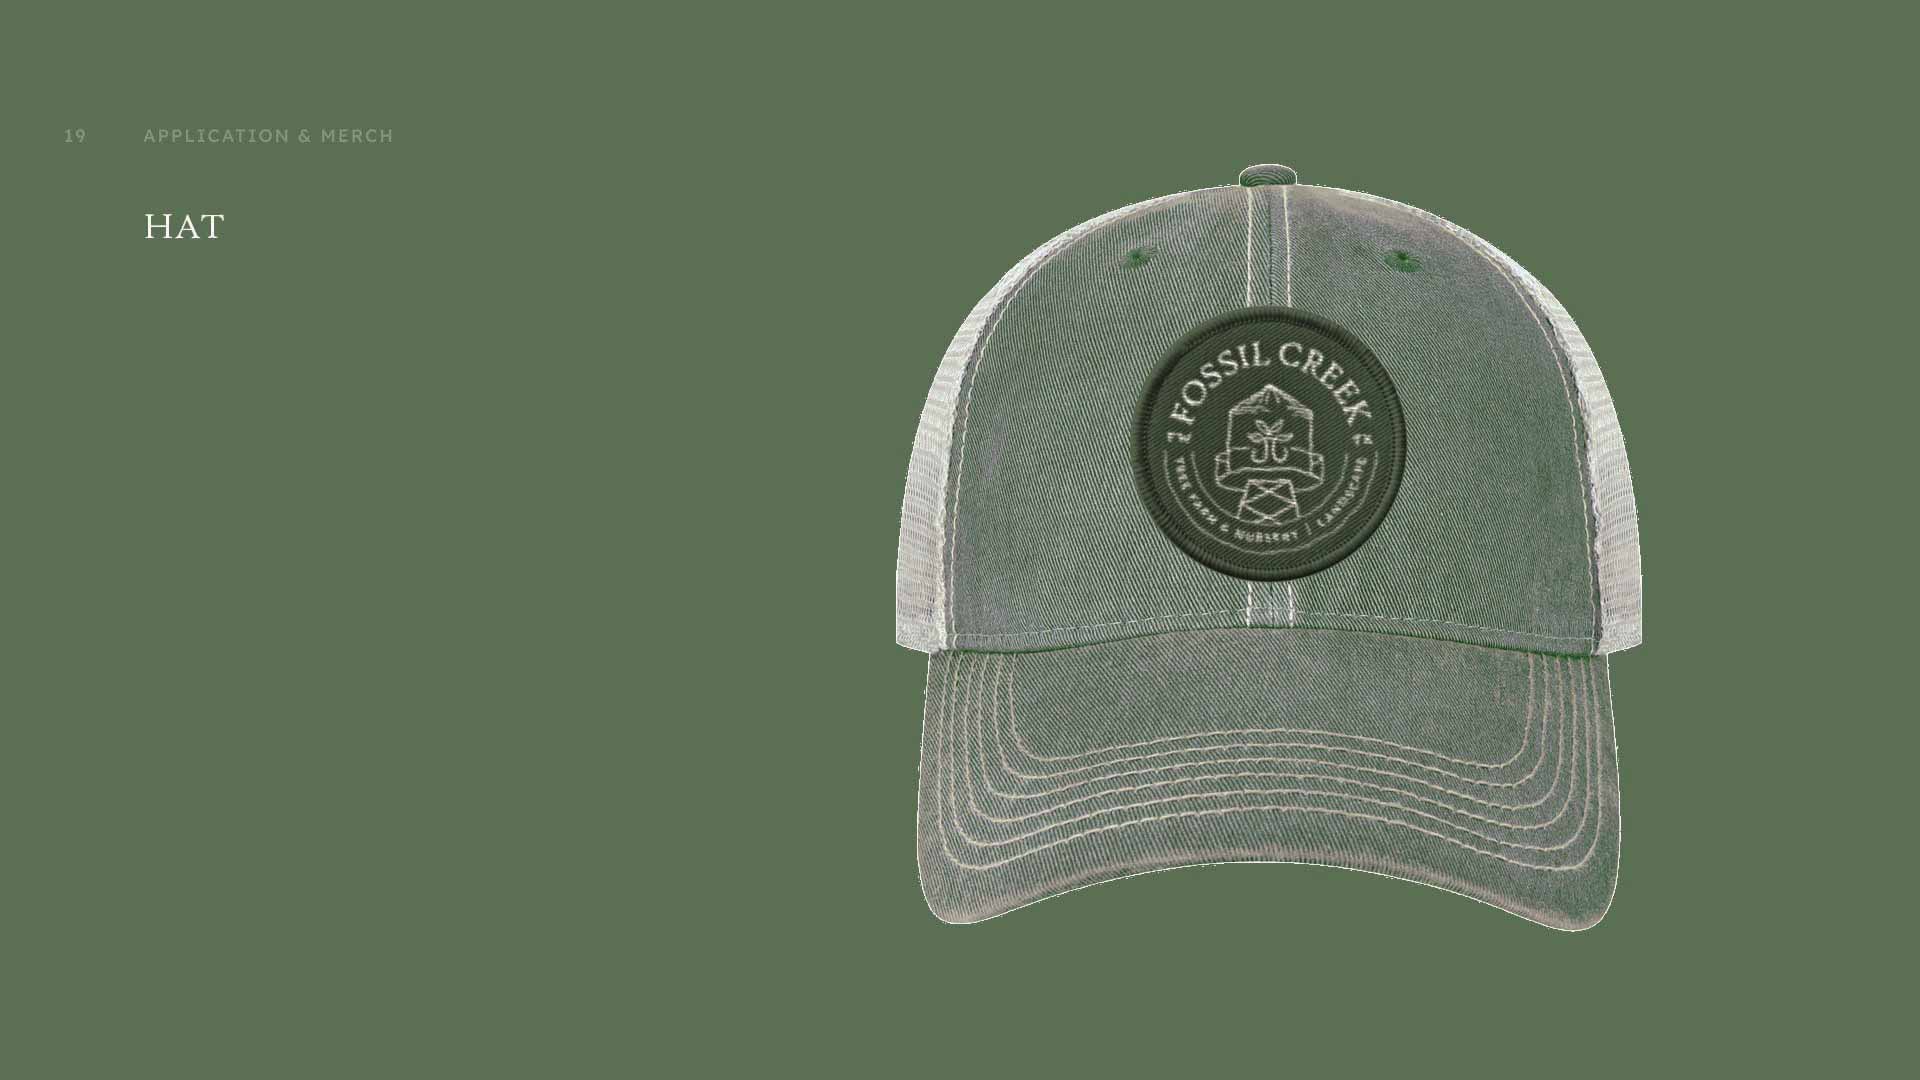 Fossil Creek Tree Farm brand design on a baseball cap